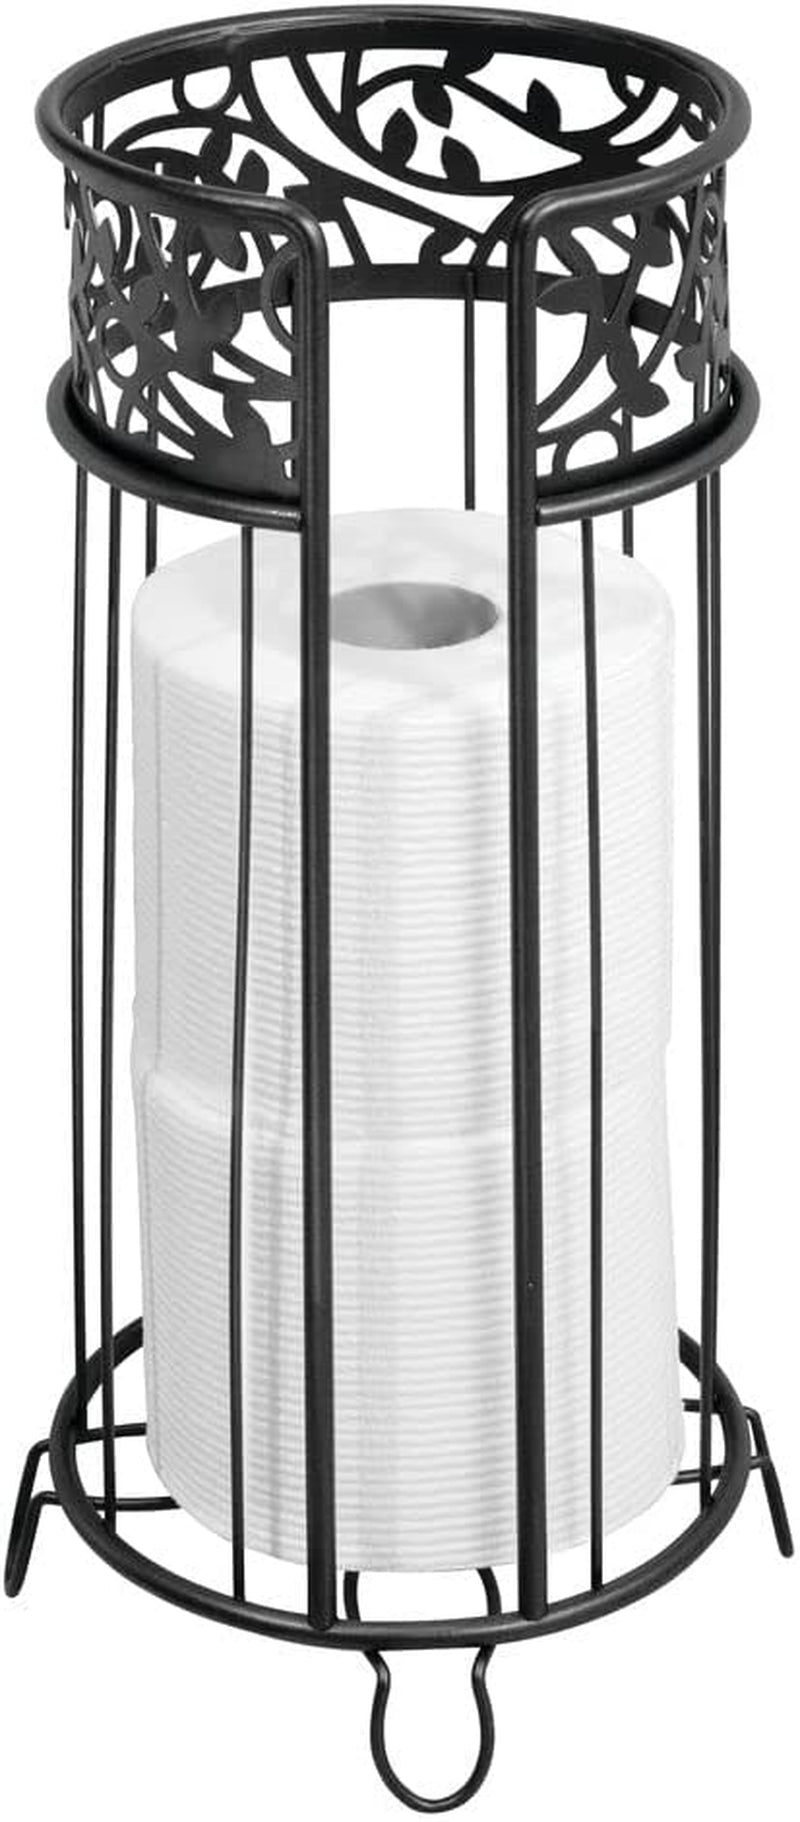 mDesign, (Matte Black) - Mdesign Free Standing Toilet Paper Holder for Bathroom Storage - Matte Black